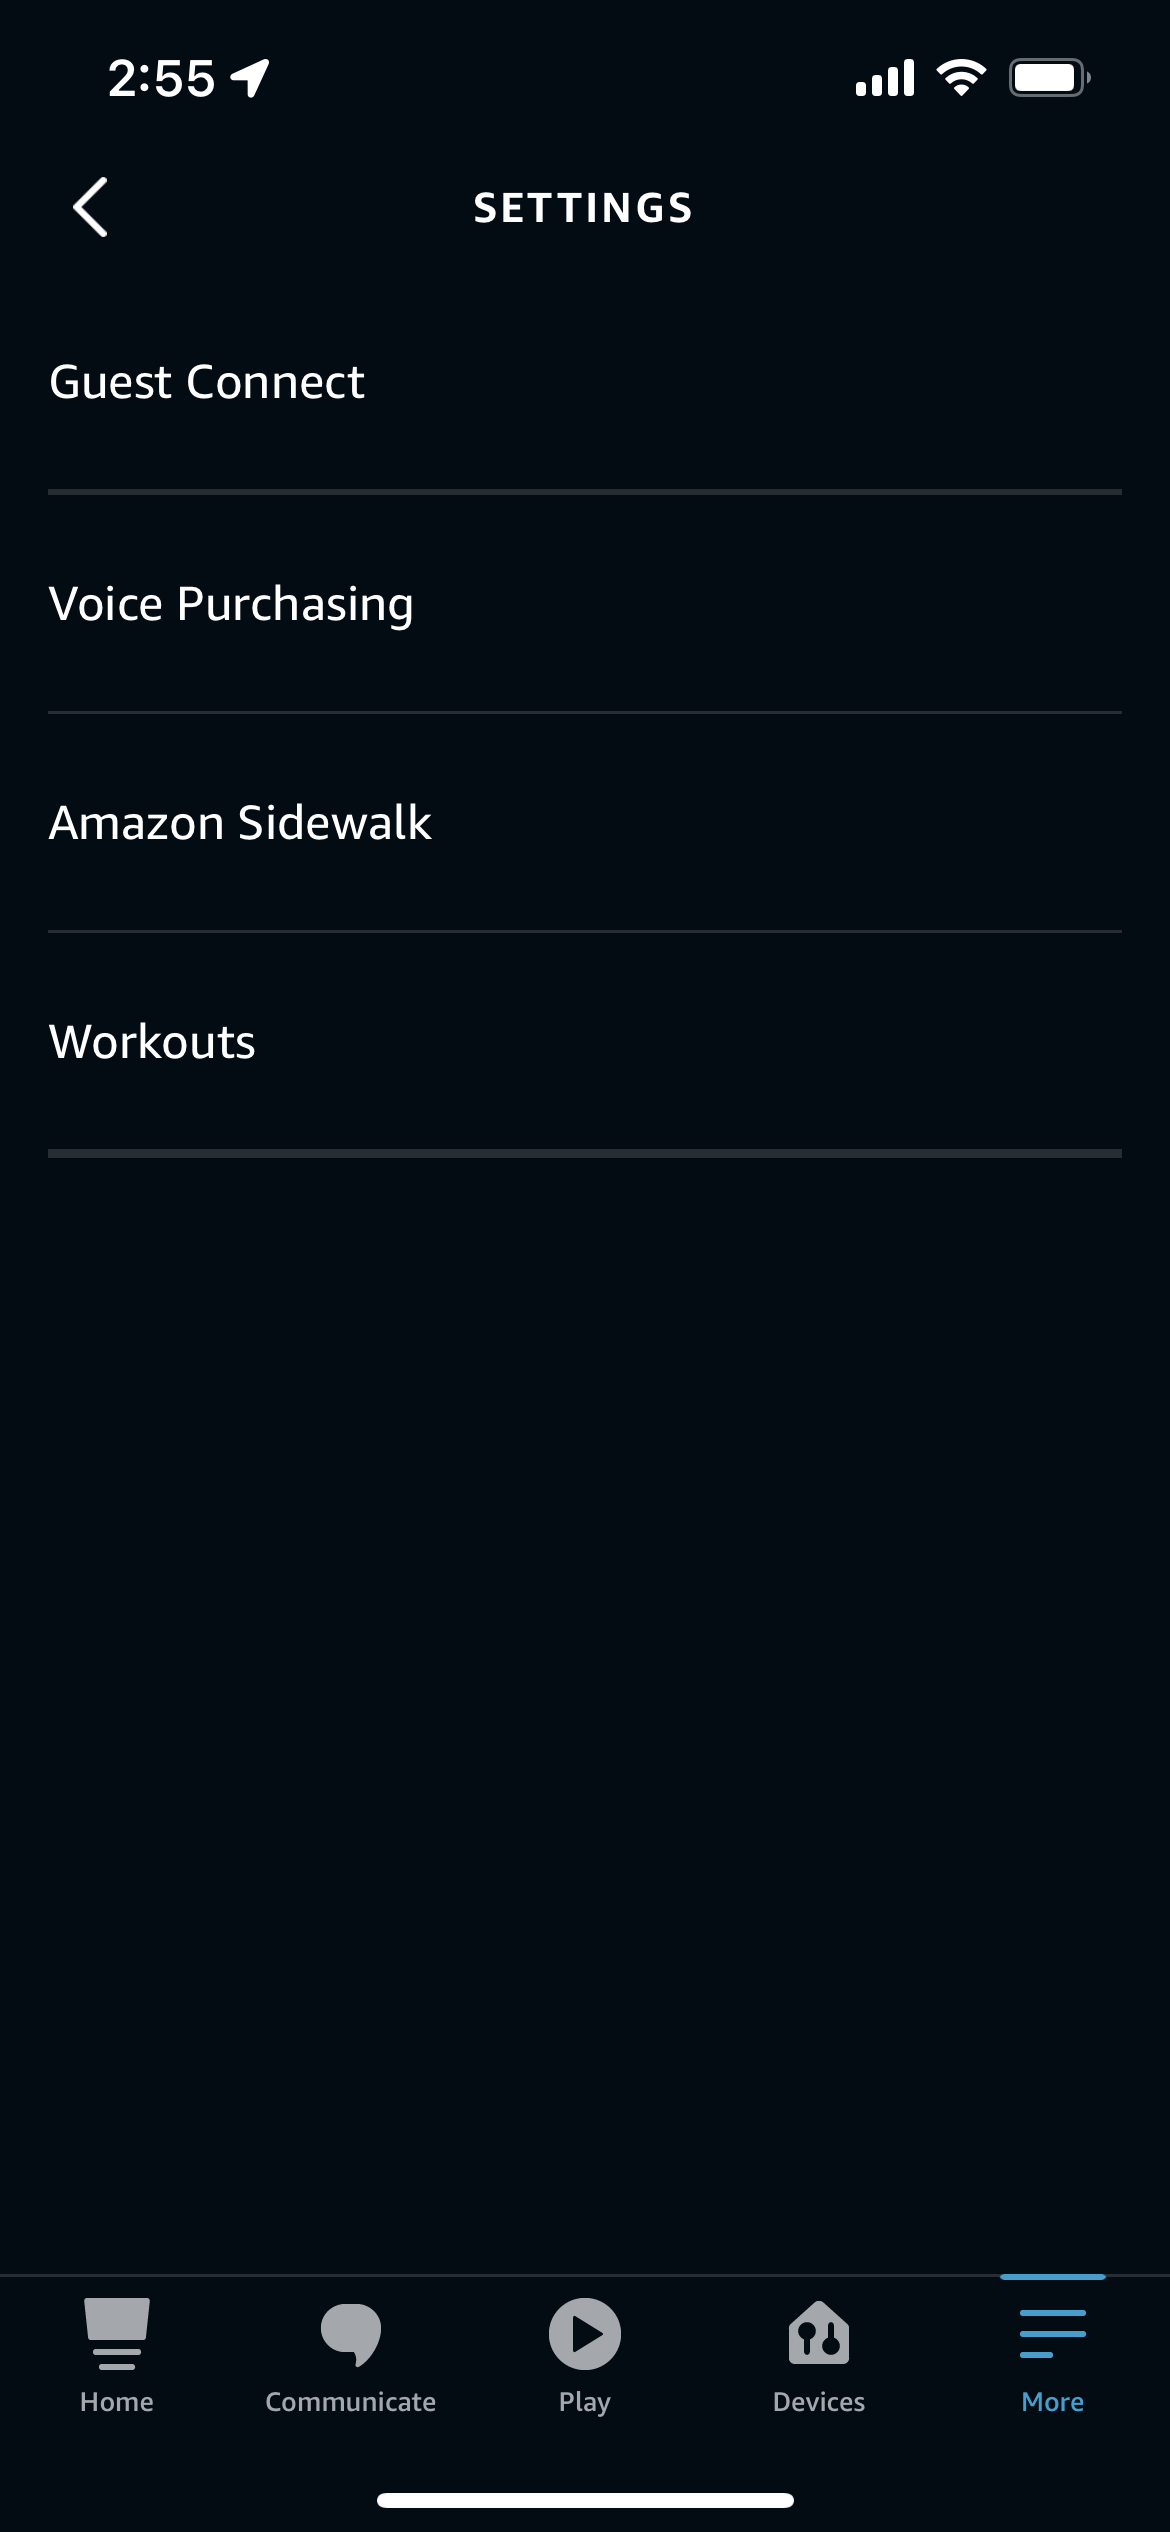 Account Settings in the Alexa app